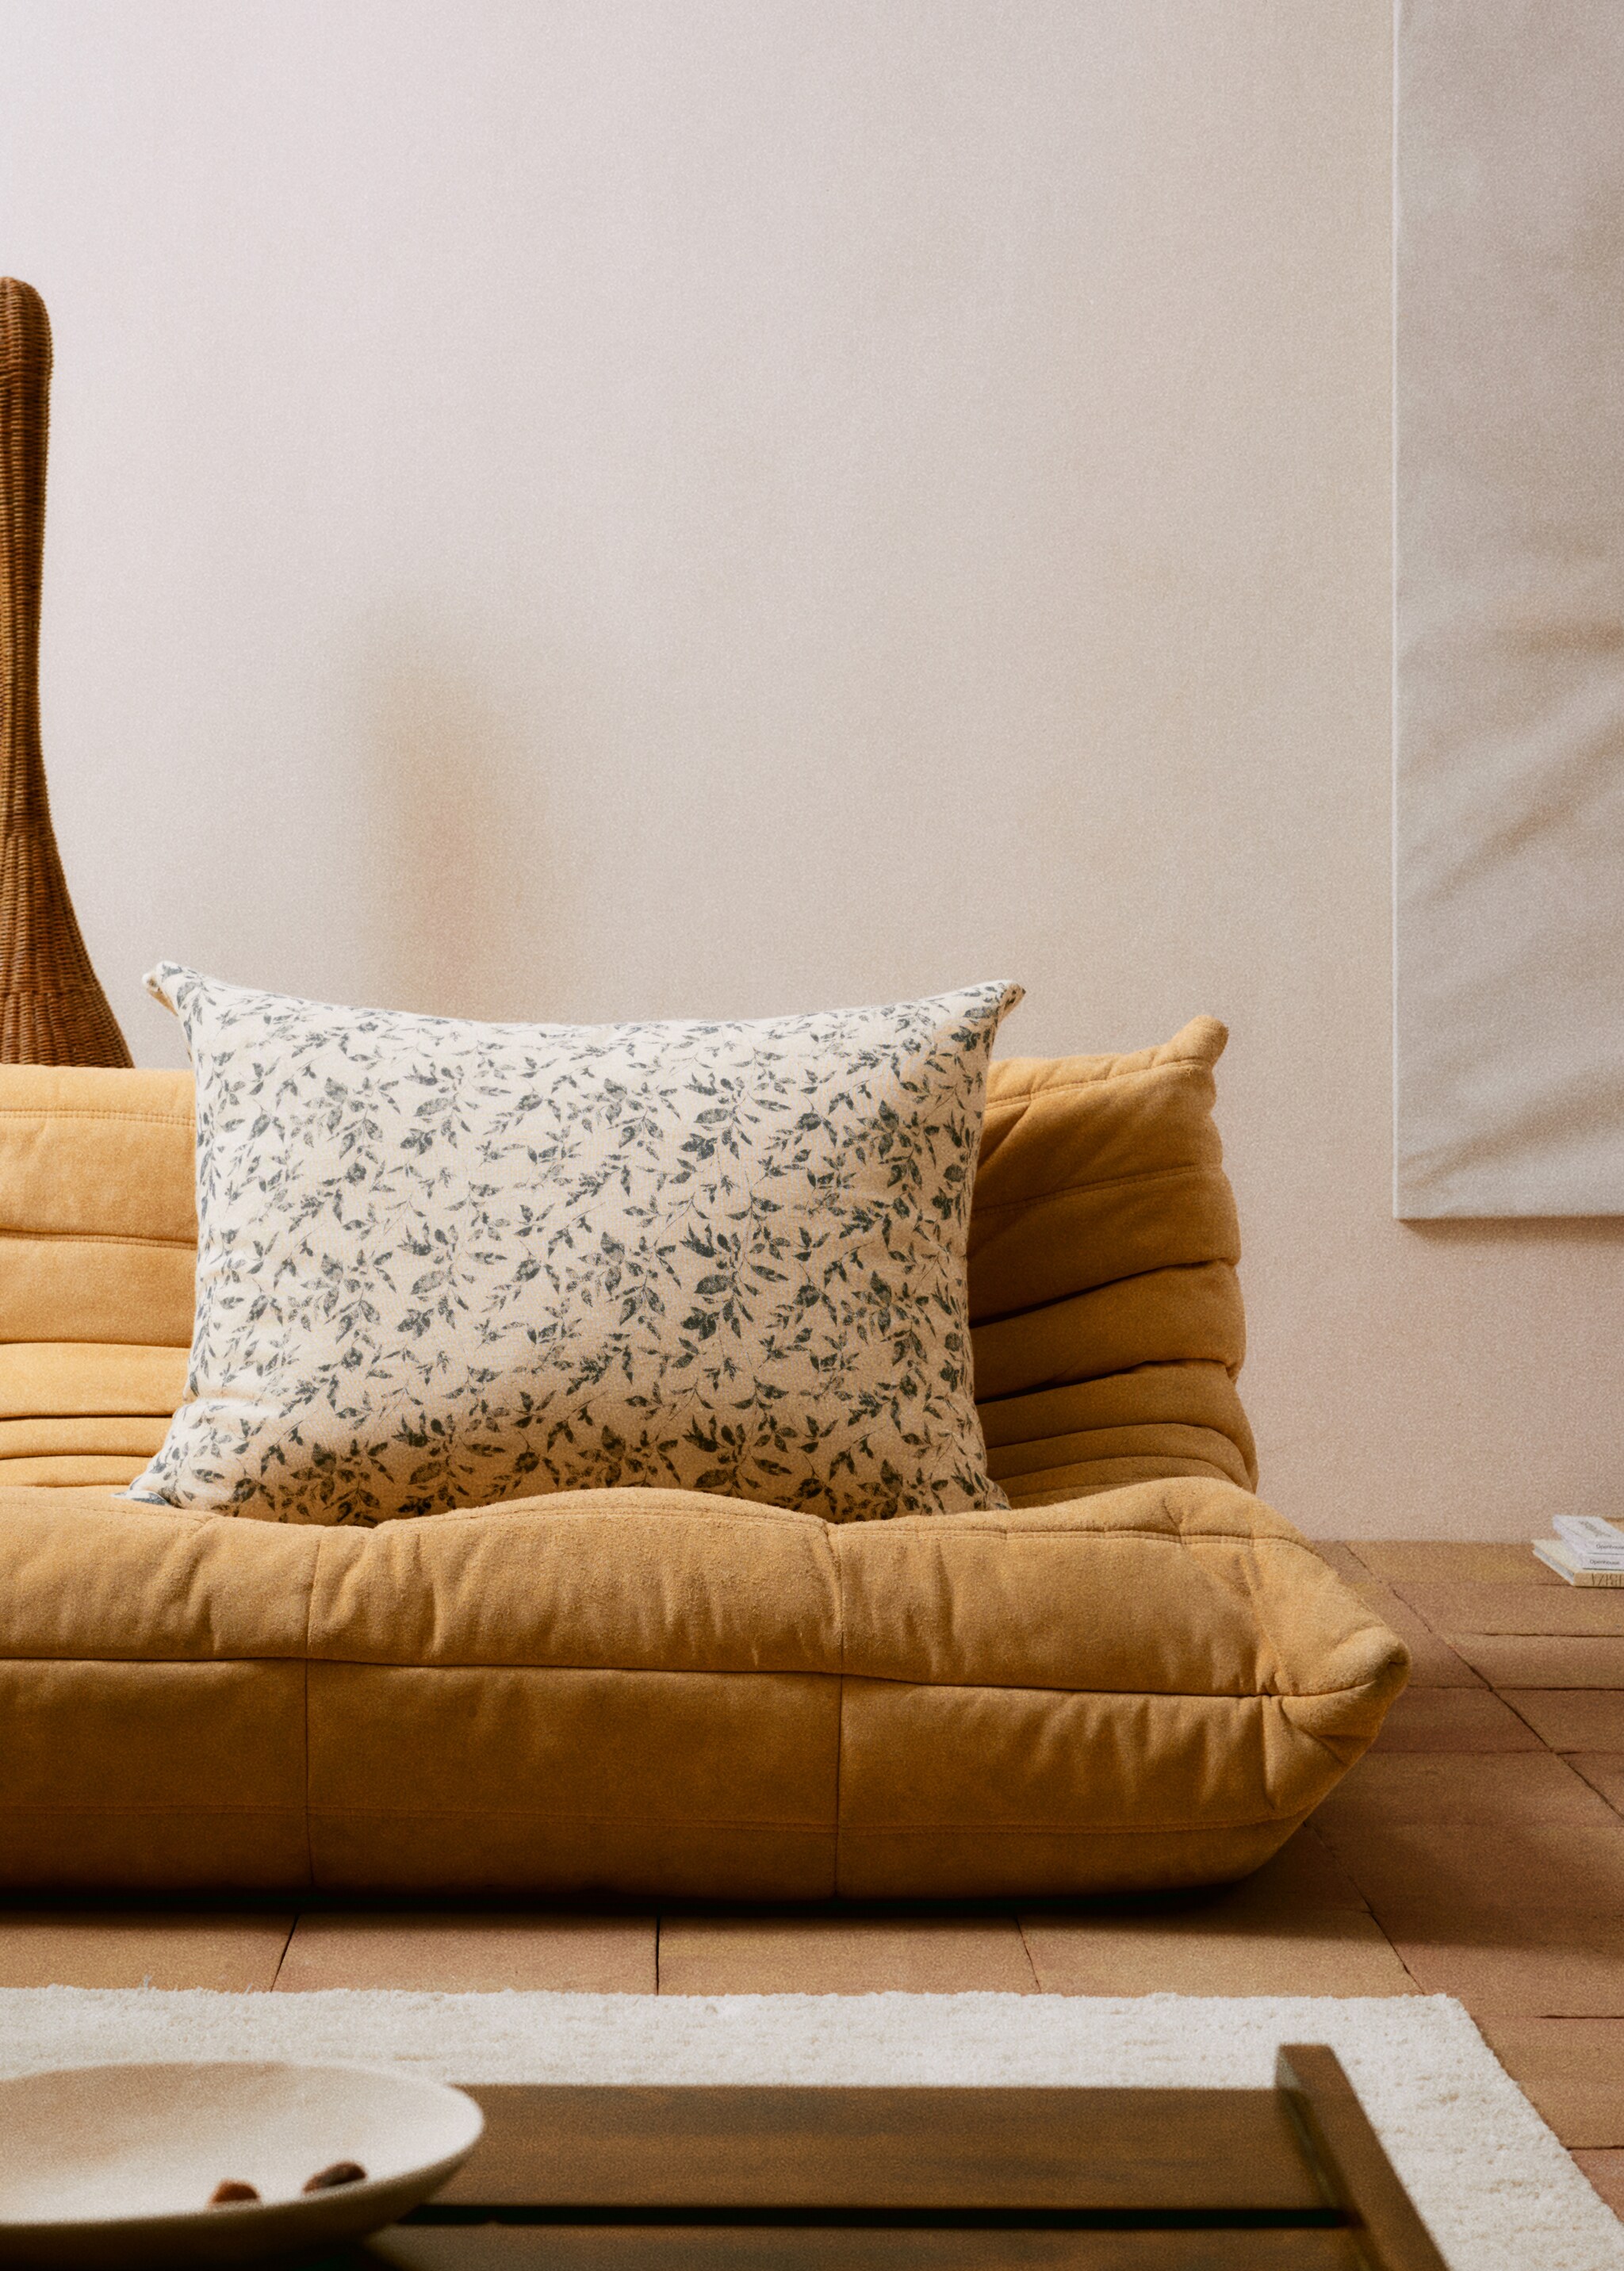 Cotton linen floral cushion cover 70x90cm - Details of the article 6